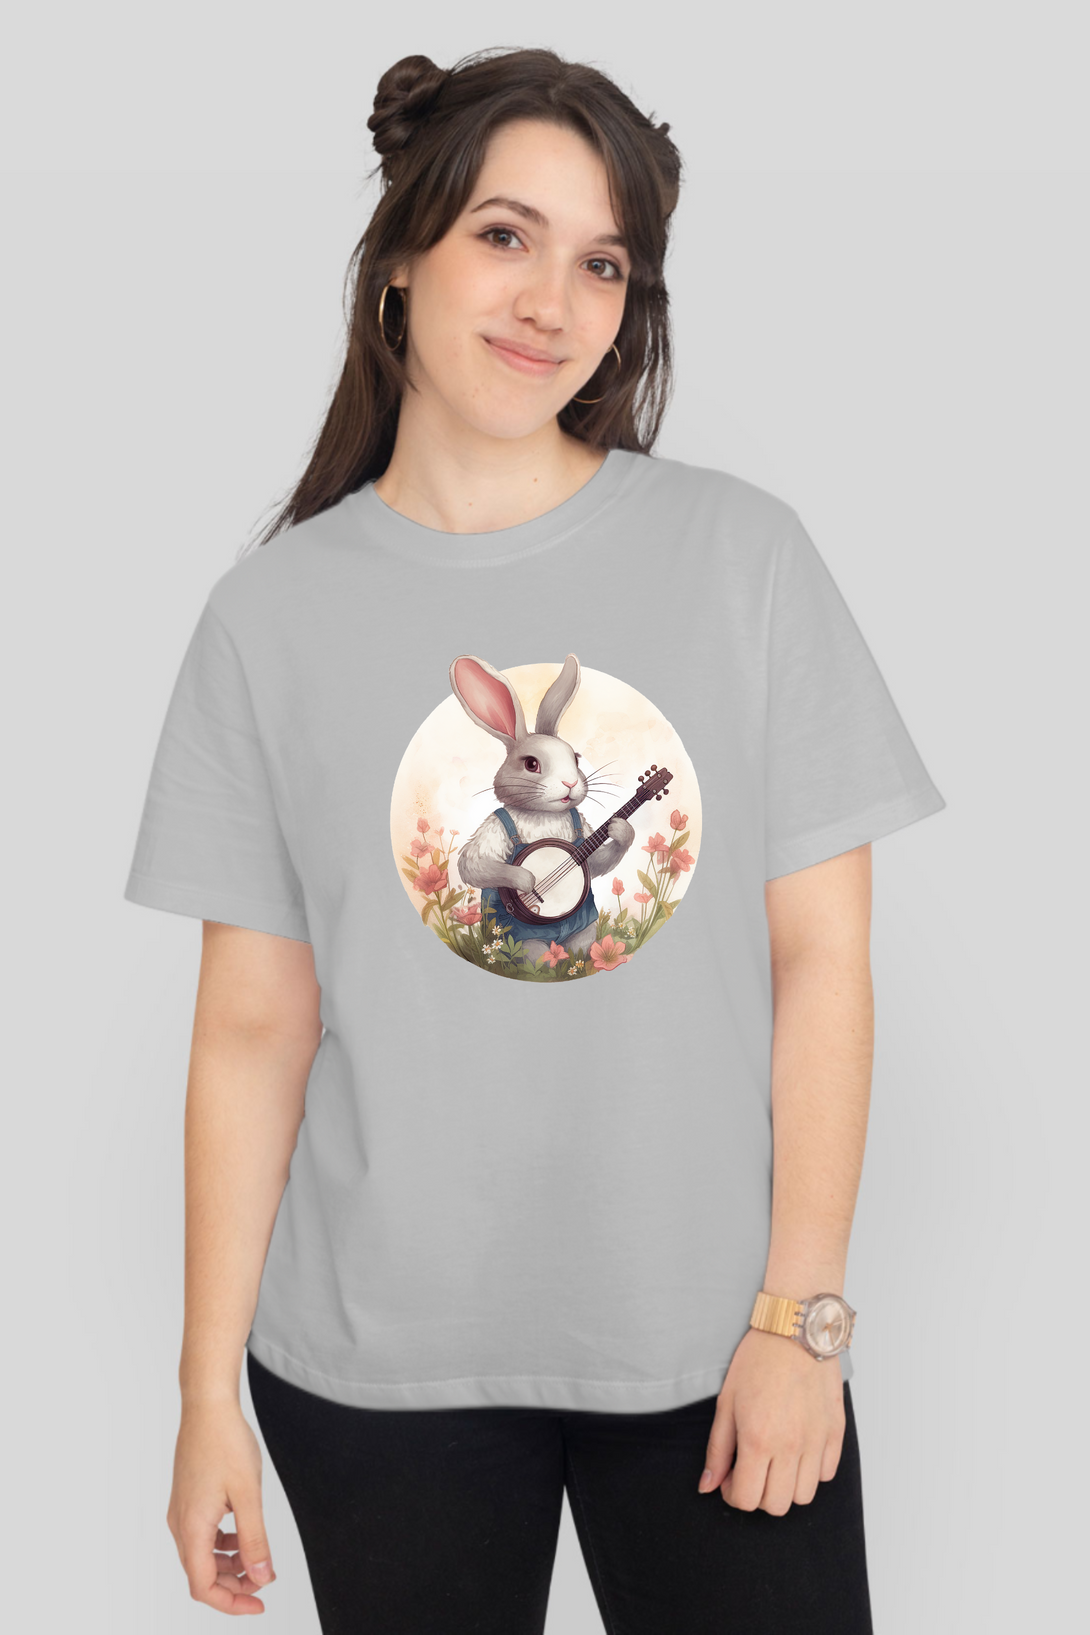 Bunny Jammin Printed T-Shirt For Women - WowWaves - 10